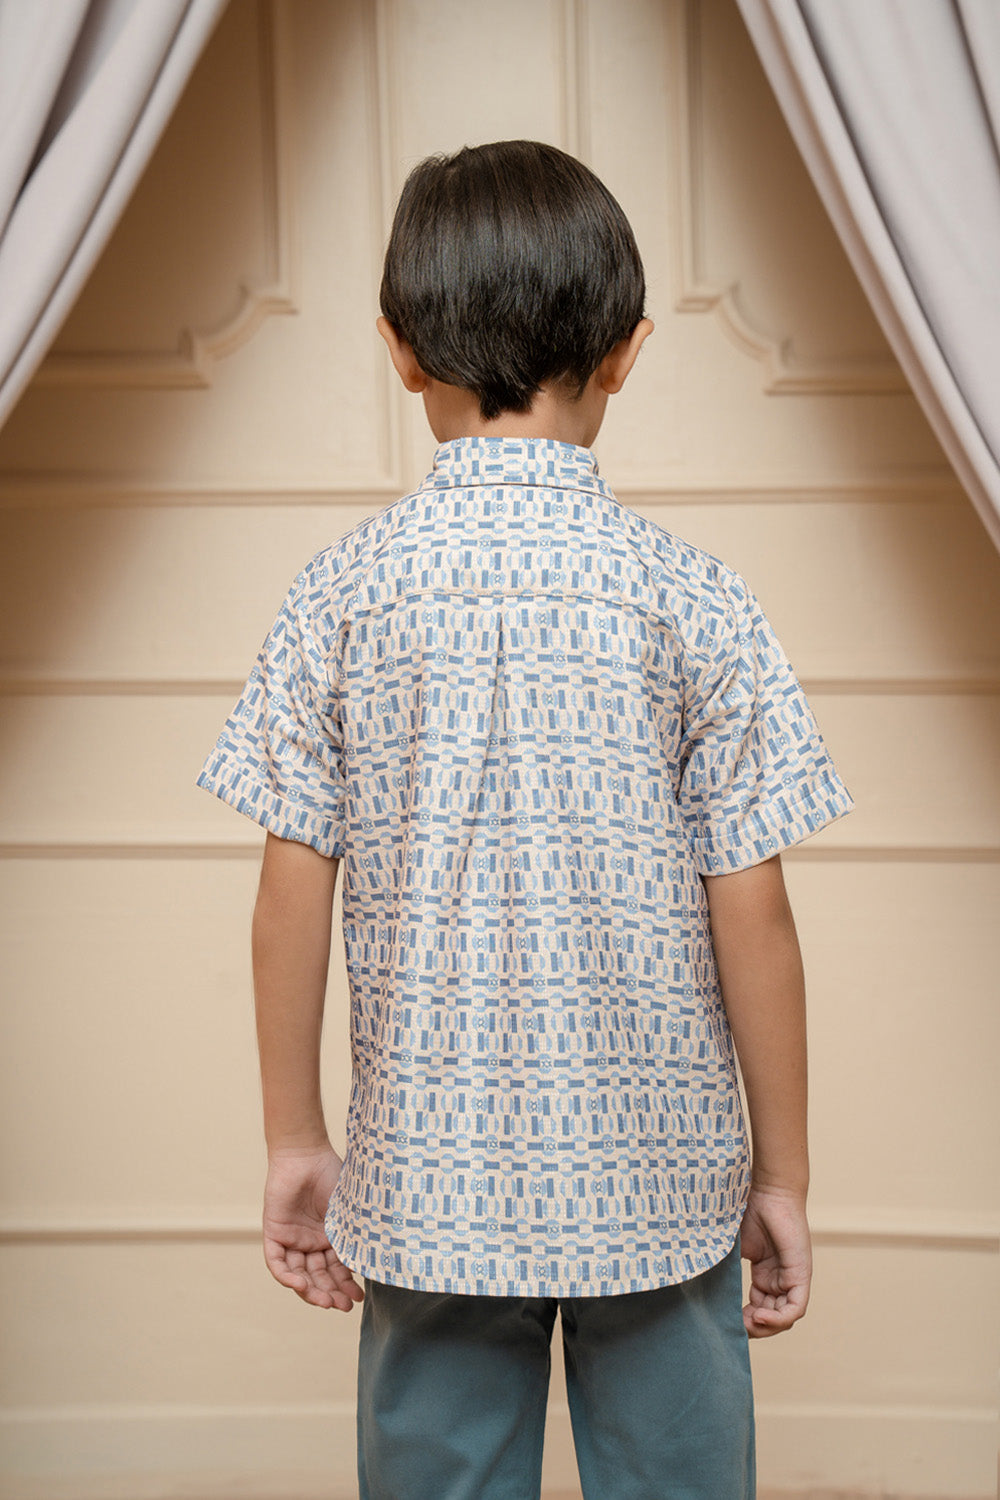 Sentani Shirt Boy (Minor) Kasuari